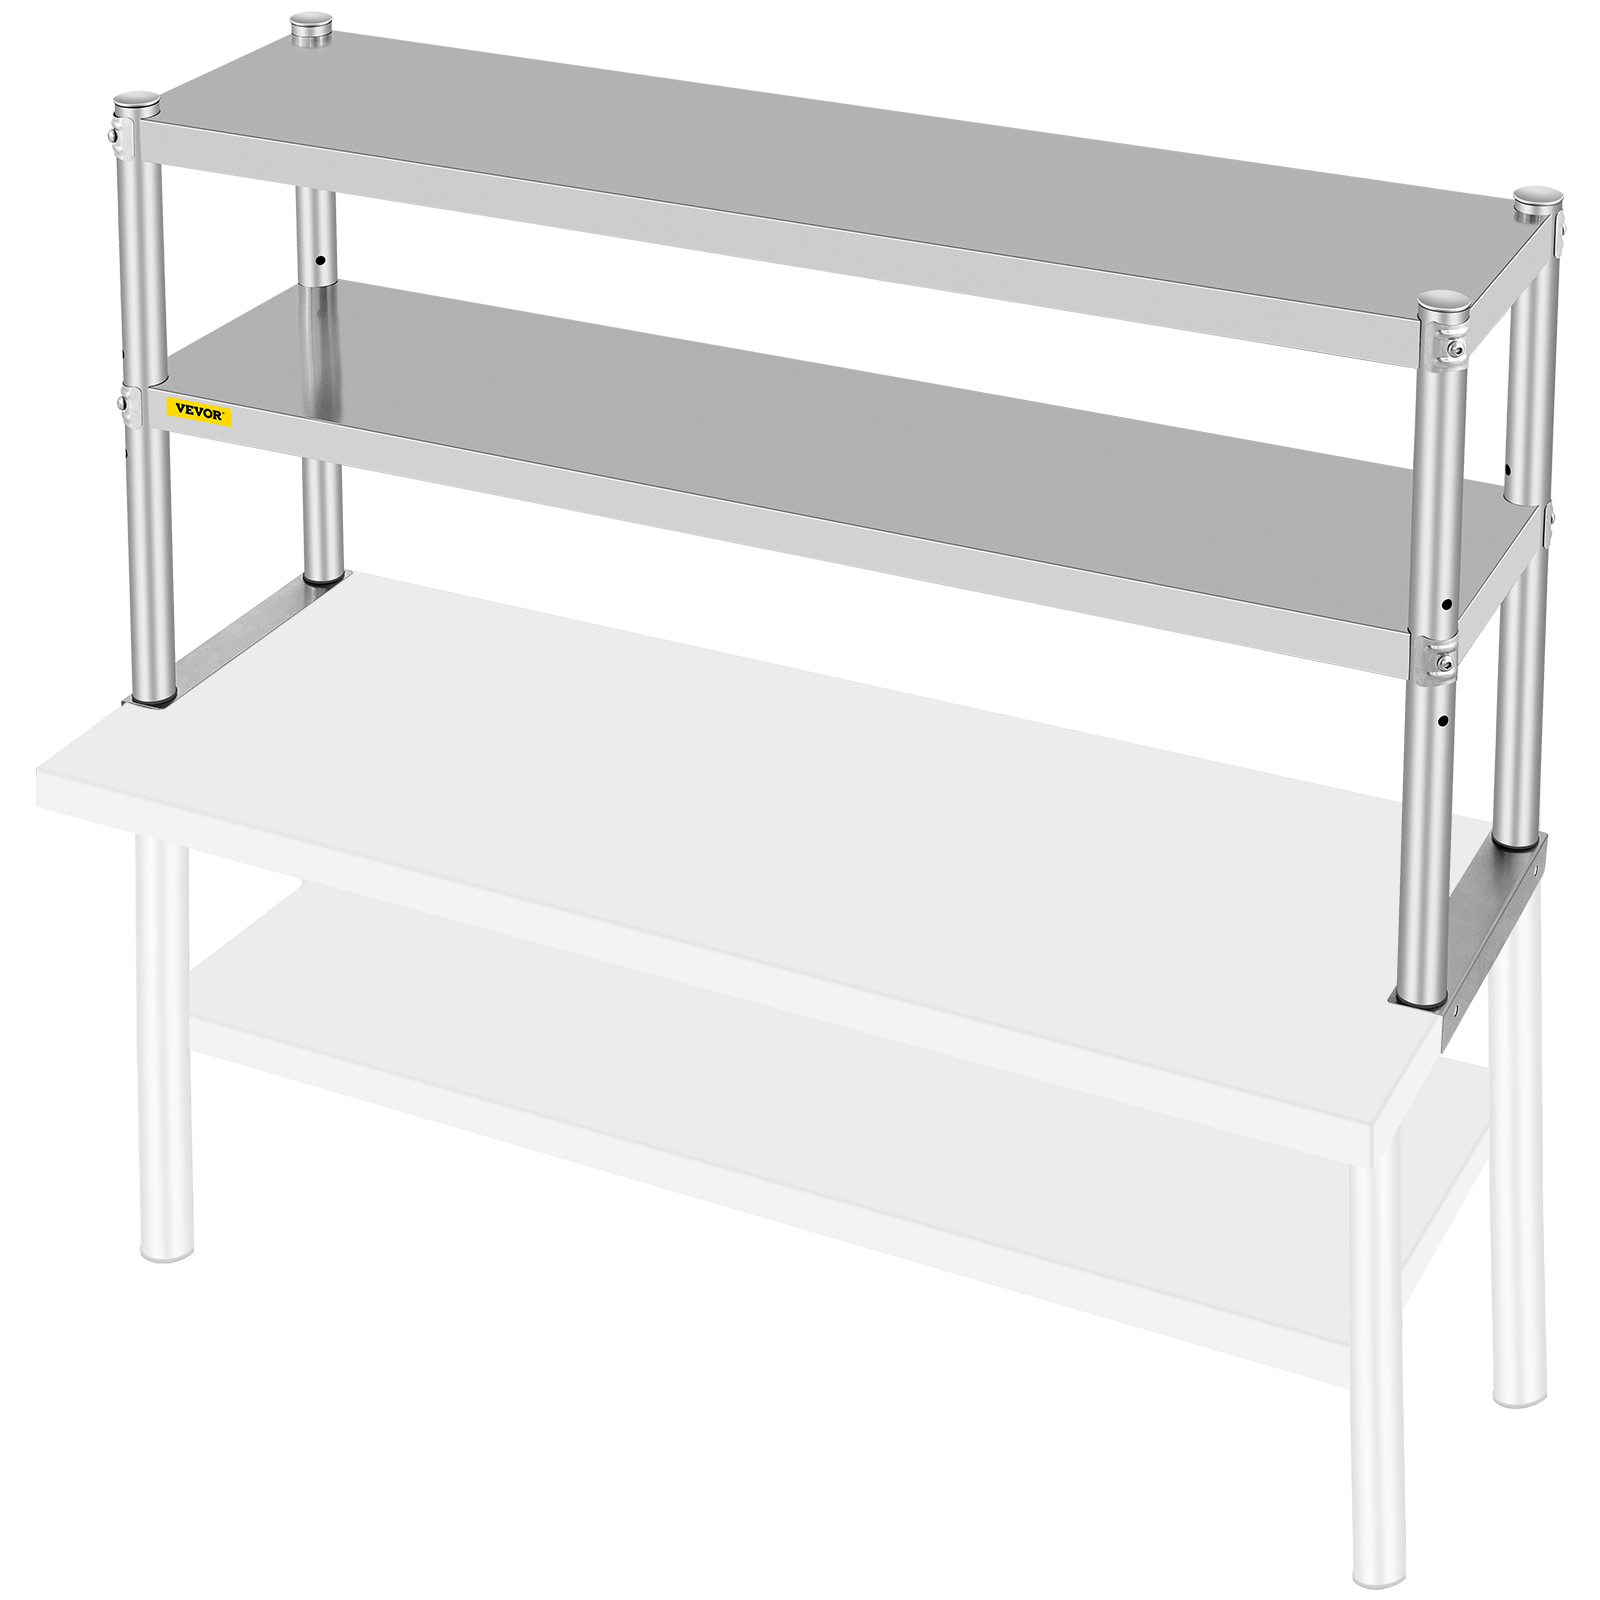 Stainless Steel for Work Table Adjustable Double Overshelf 14 X 36 